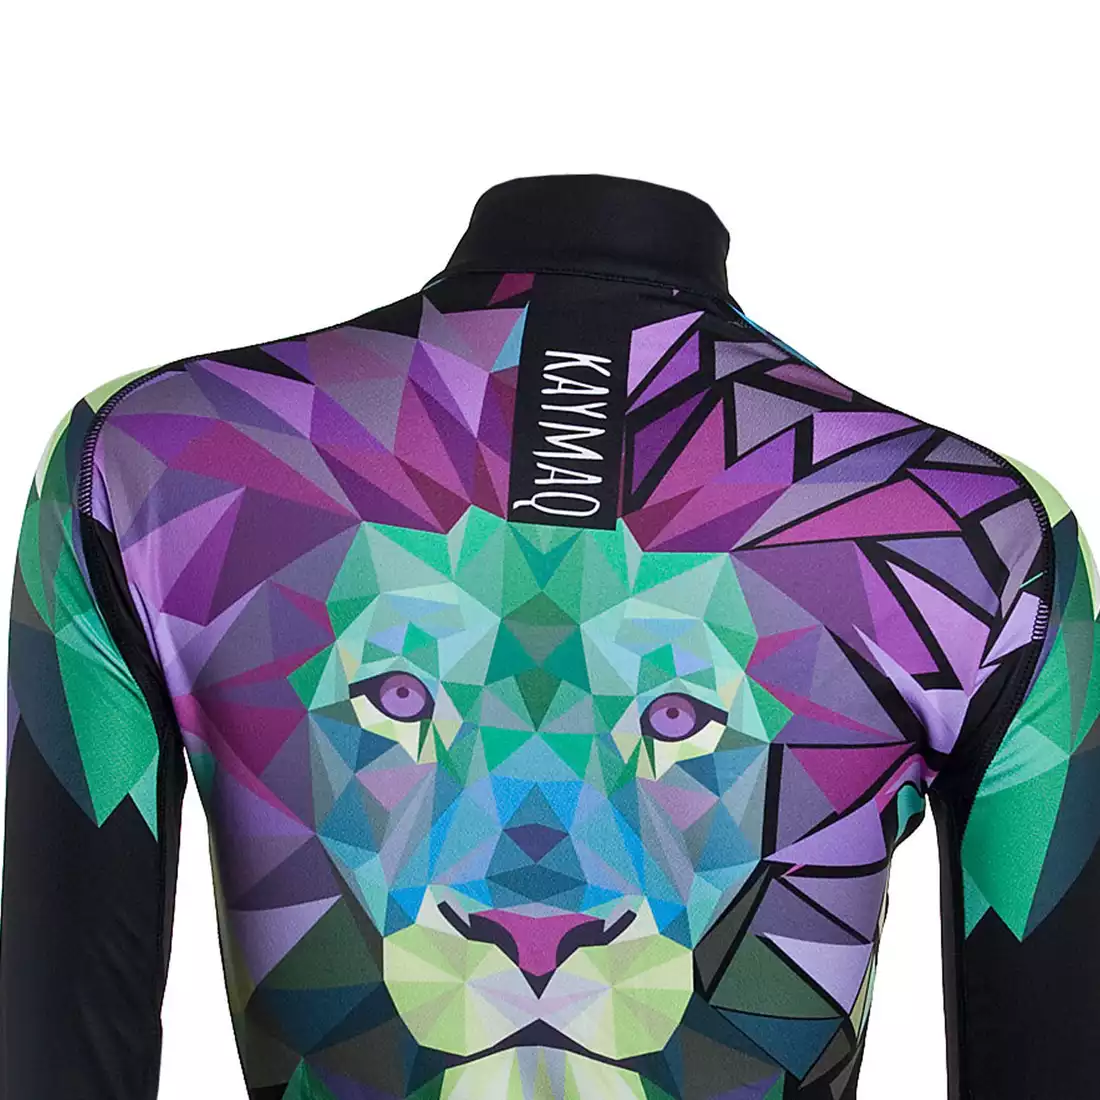 KAYMAQ POLYGONAL LION dámský cyklistický dres